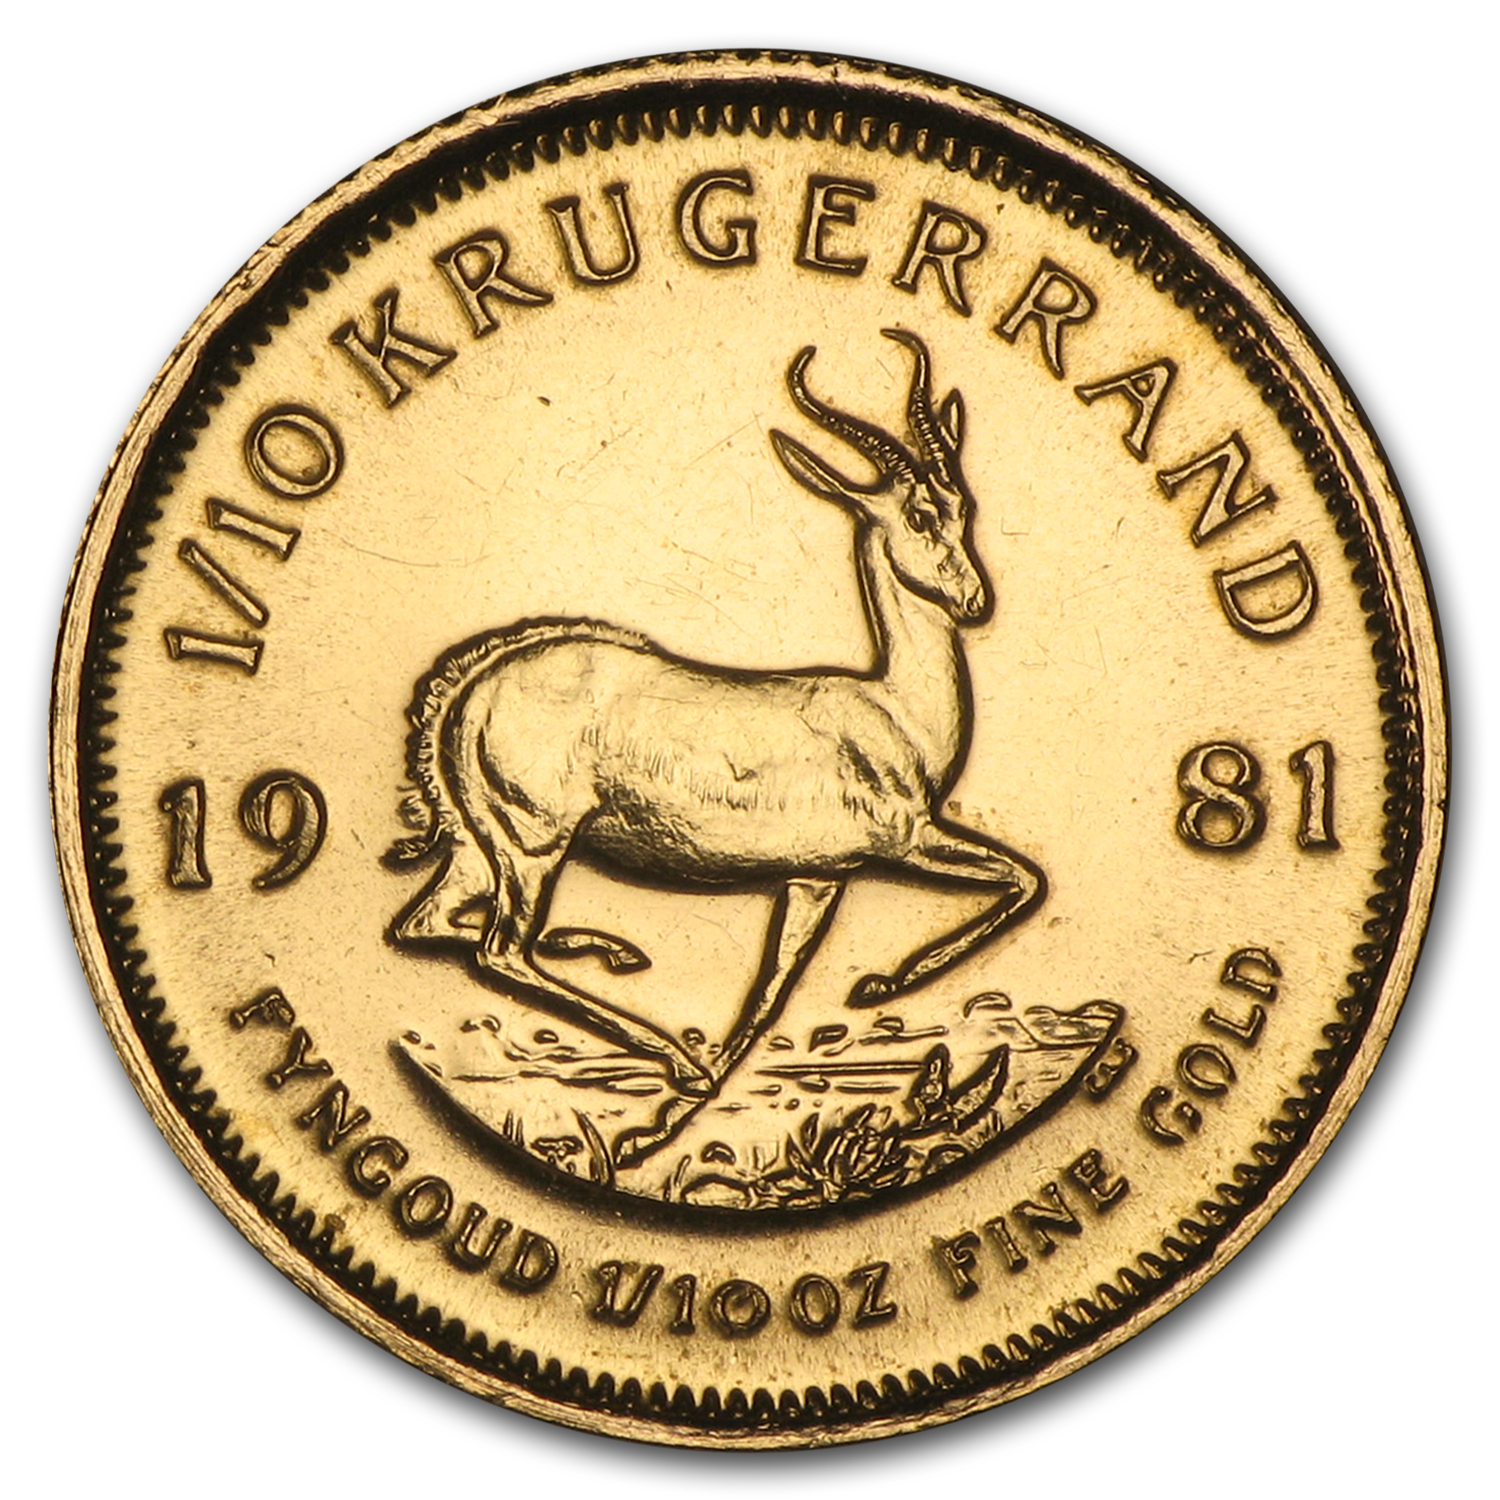 Buy 1981 South Africa 1/10 oz Gold Krugerrand - Click Image to Close